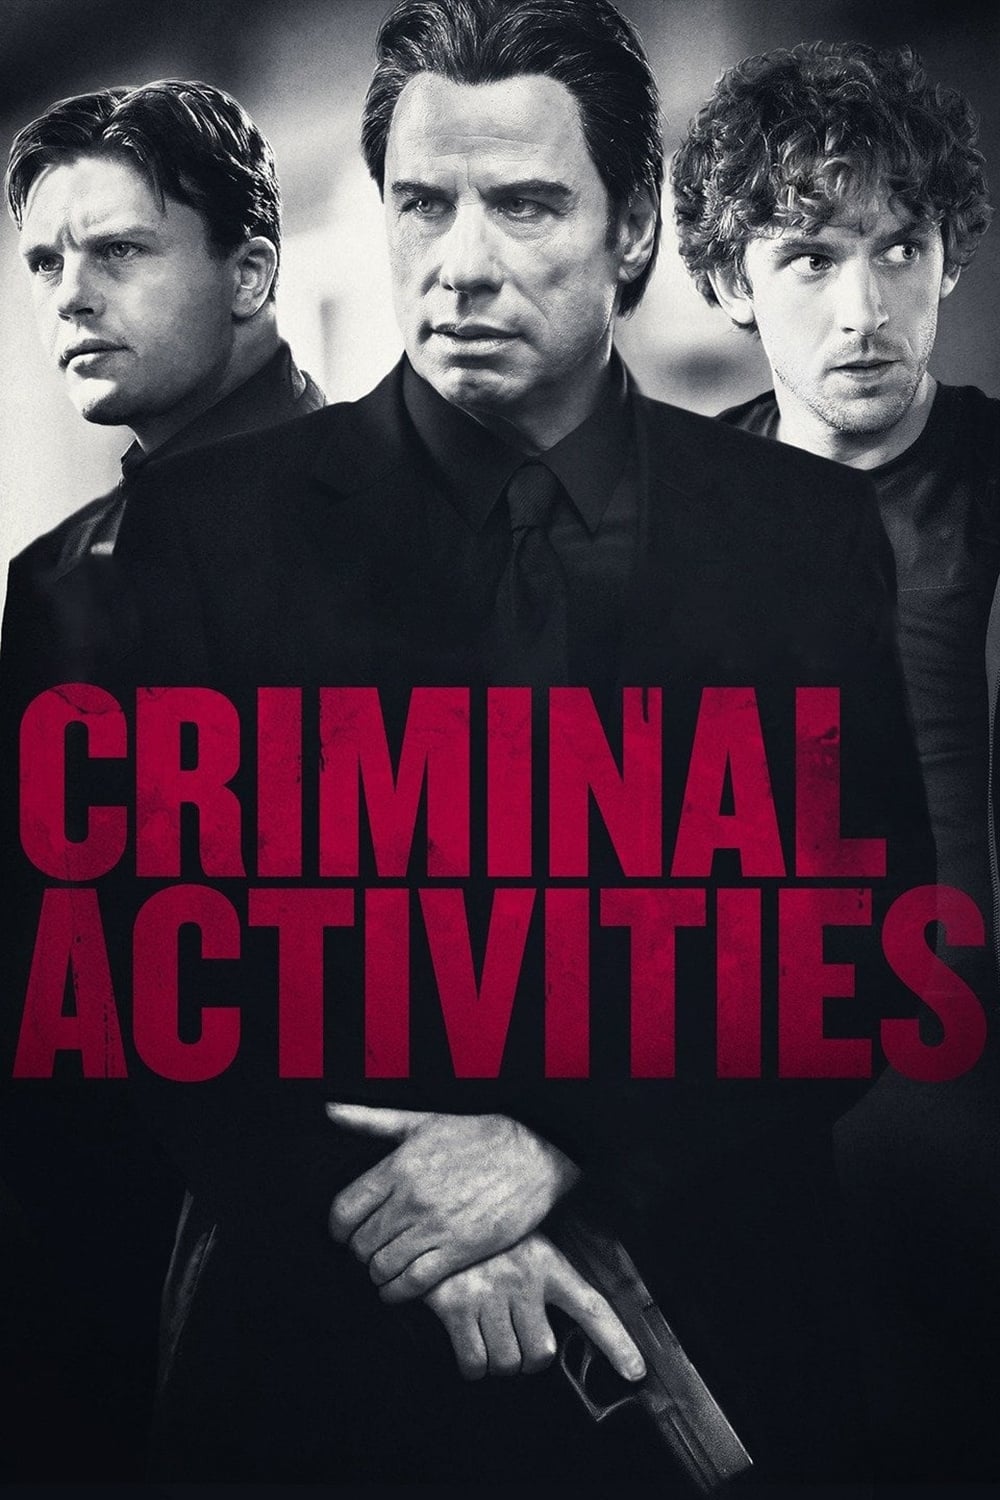 Criminal Activities (2015)